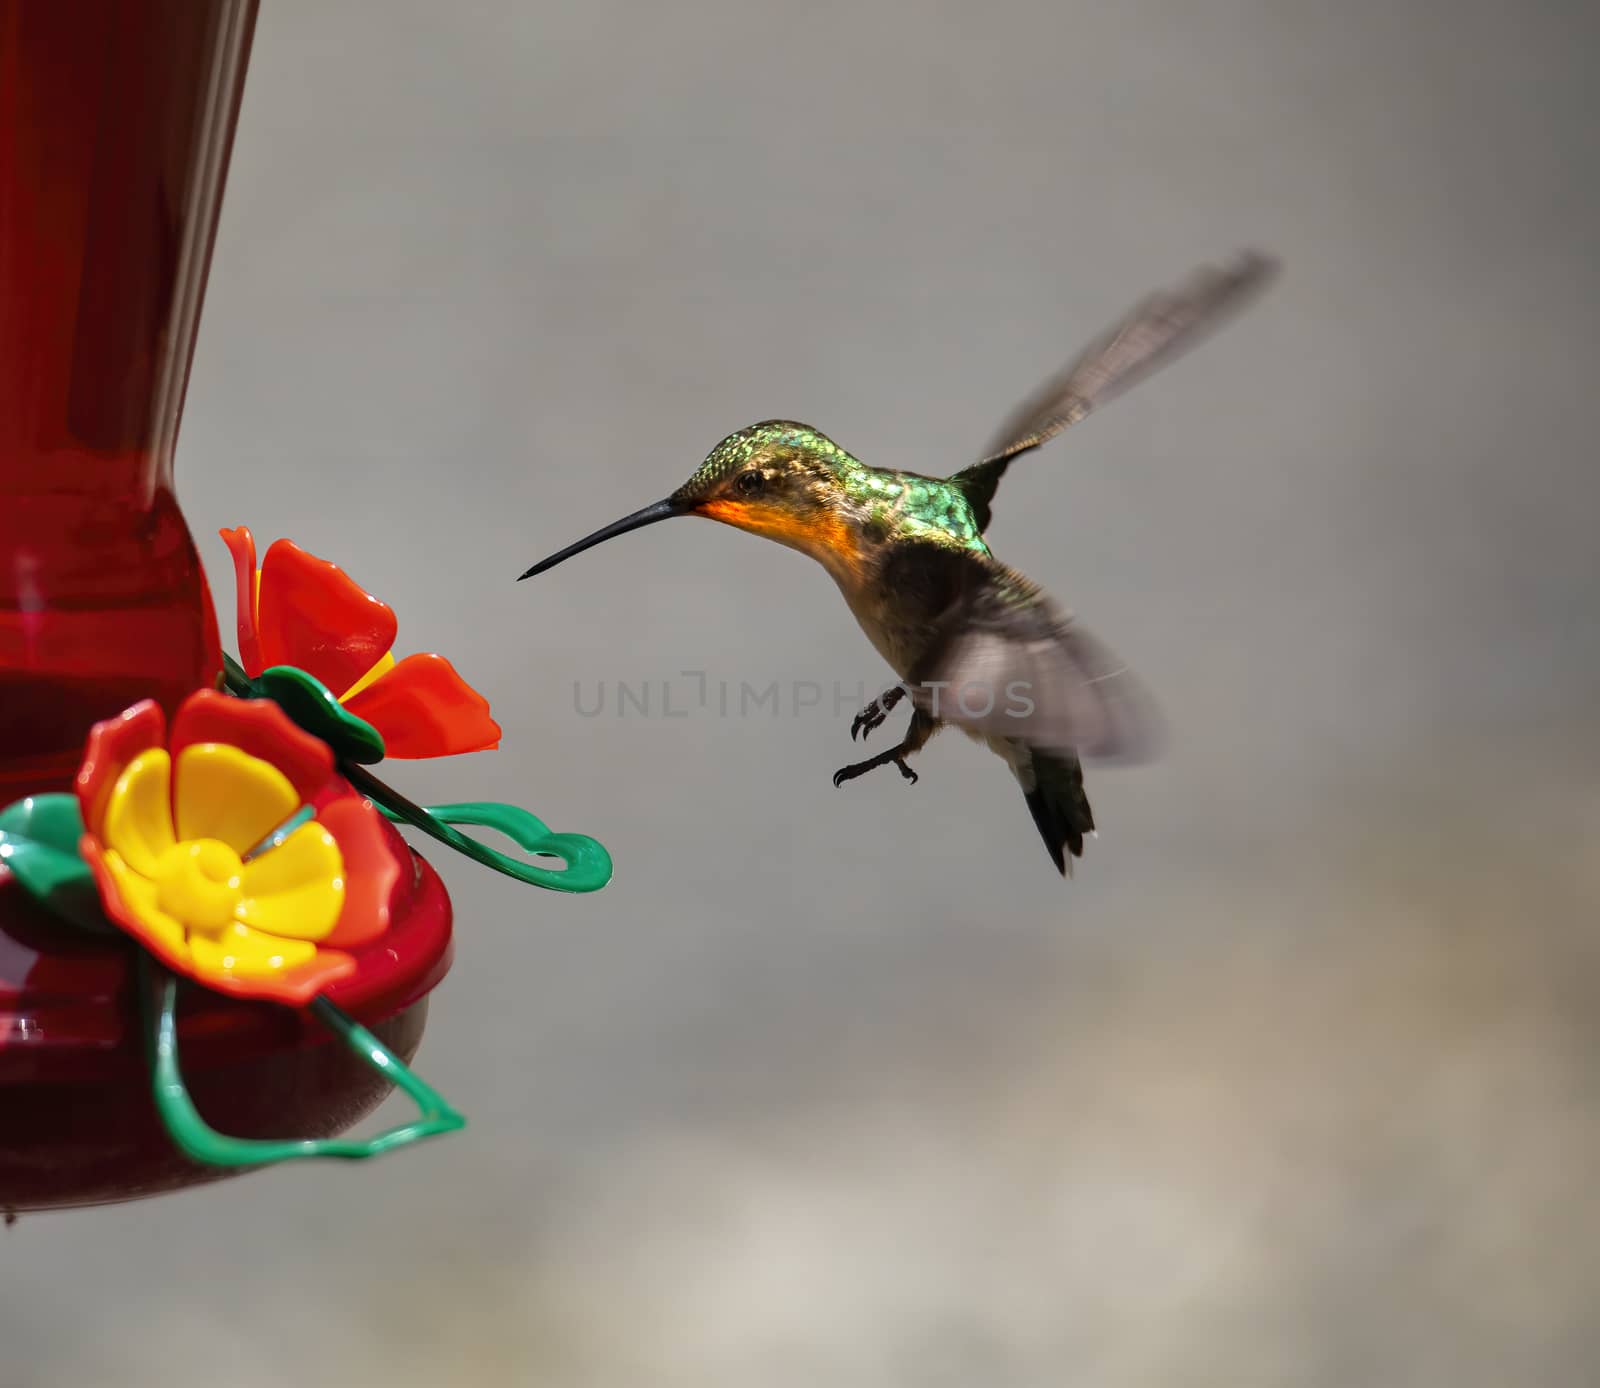 Hummingbird Approaches Nectar Feeder by CharlieFloyd